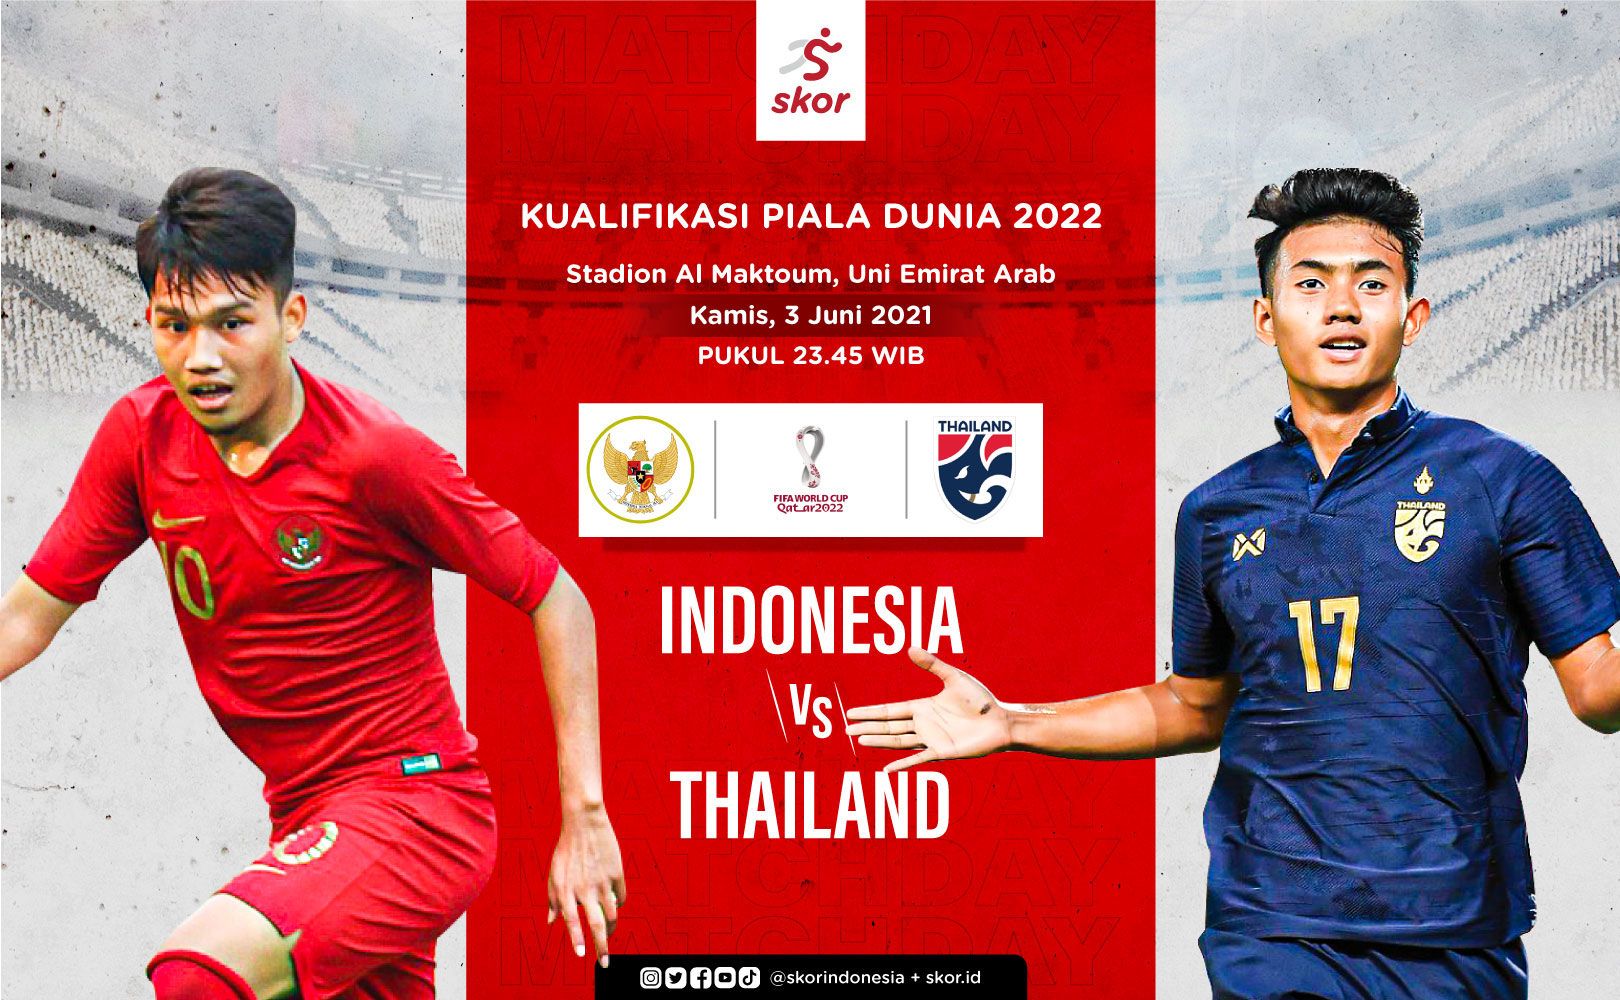 Kapan final indonesia vs thailand